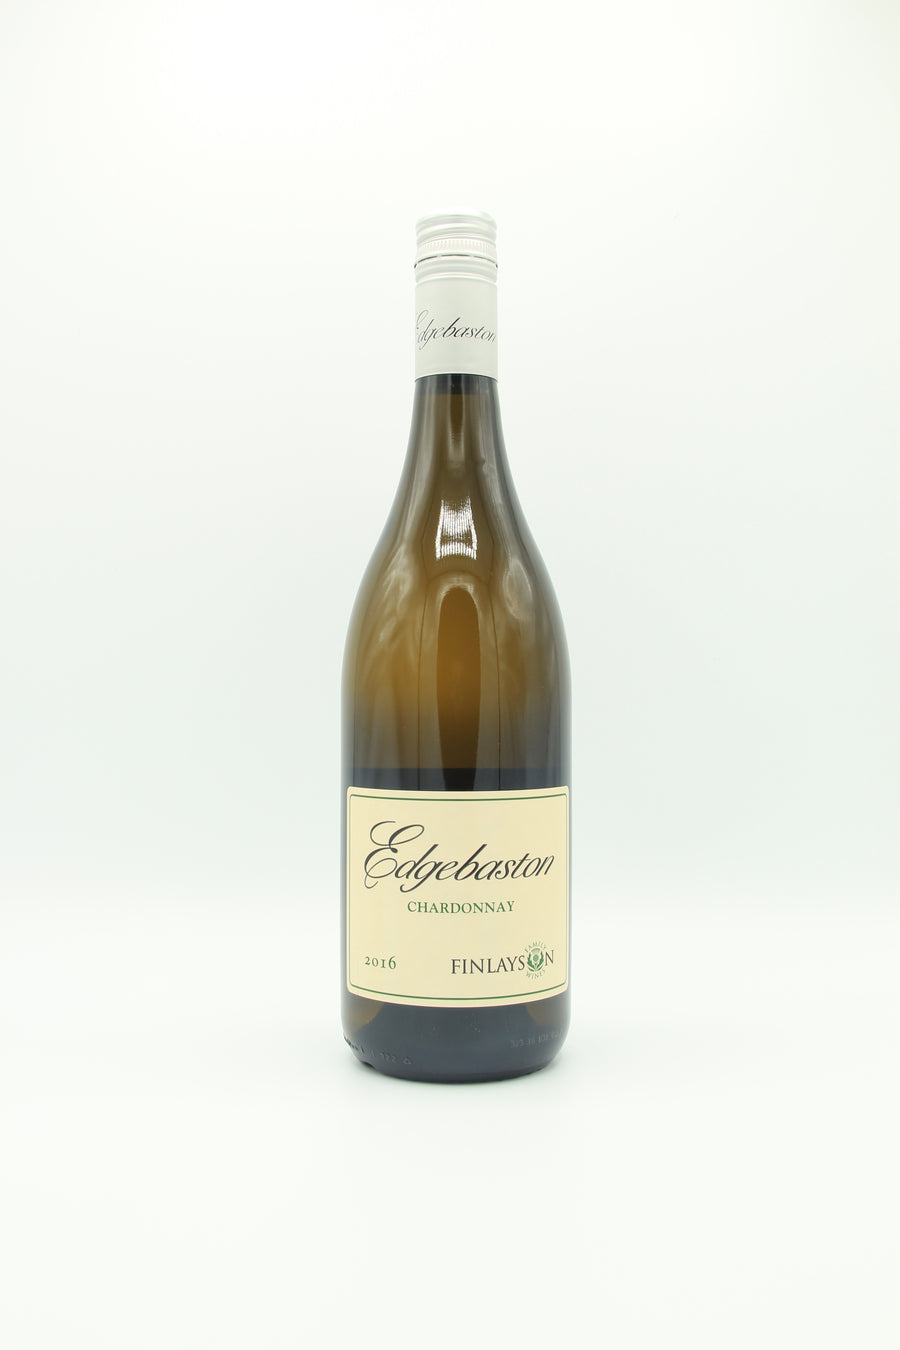 Edgebaston Chardonnay